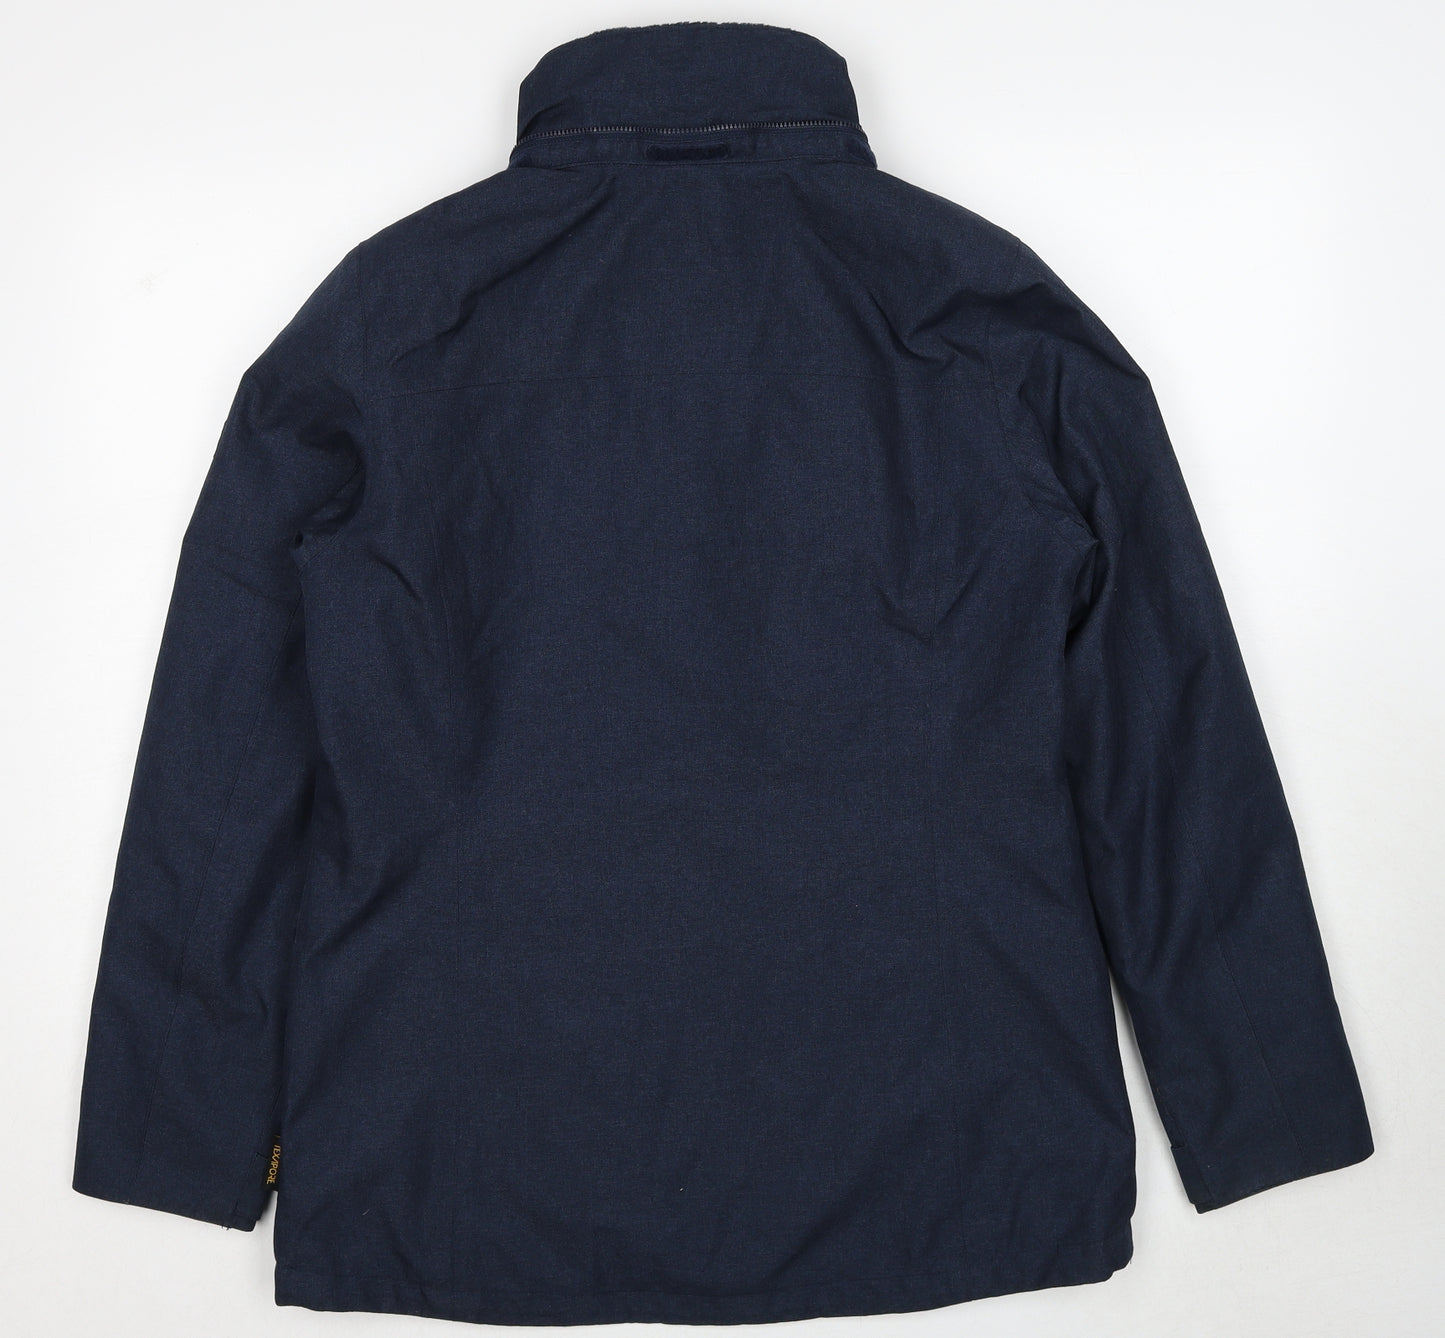 Jack Wolfskin Womens Blue Jacket Size 10 Zip - Size 10-12